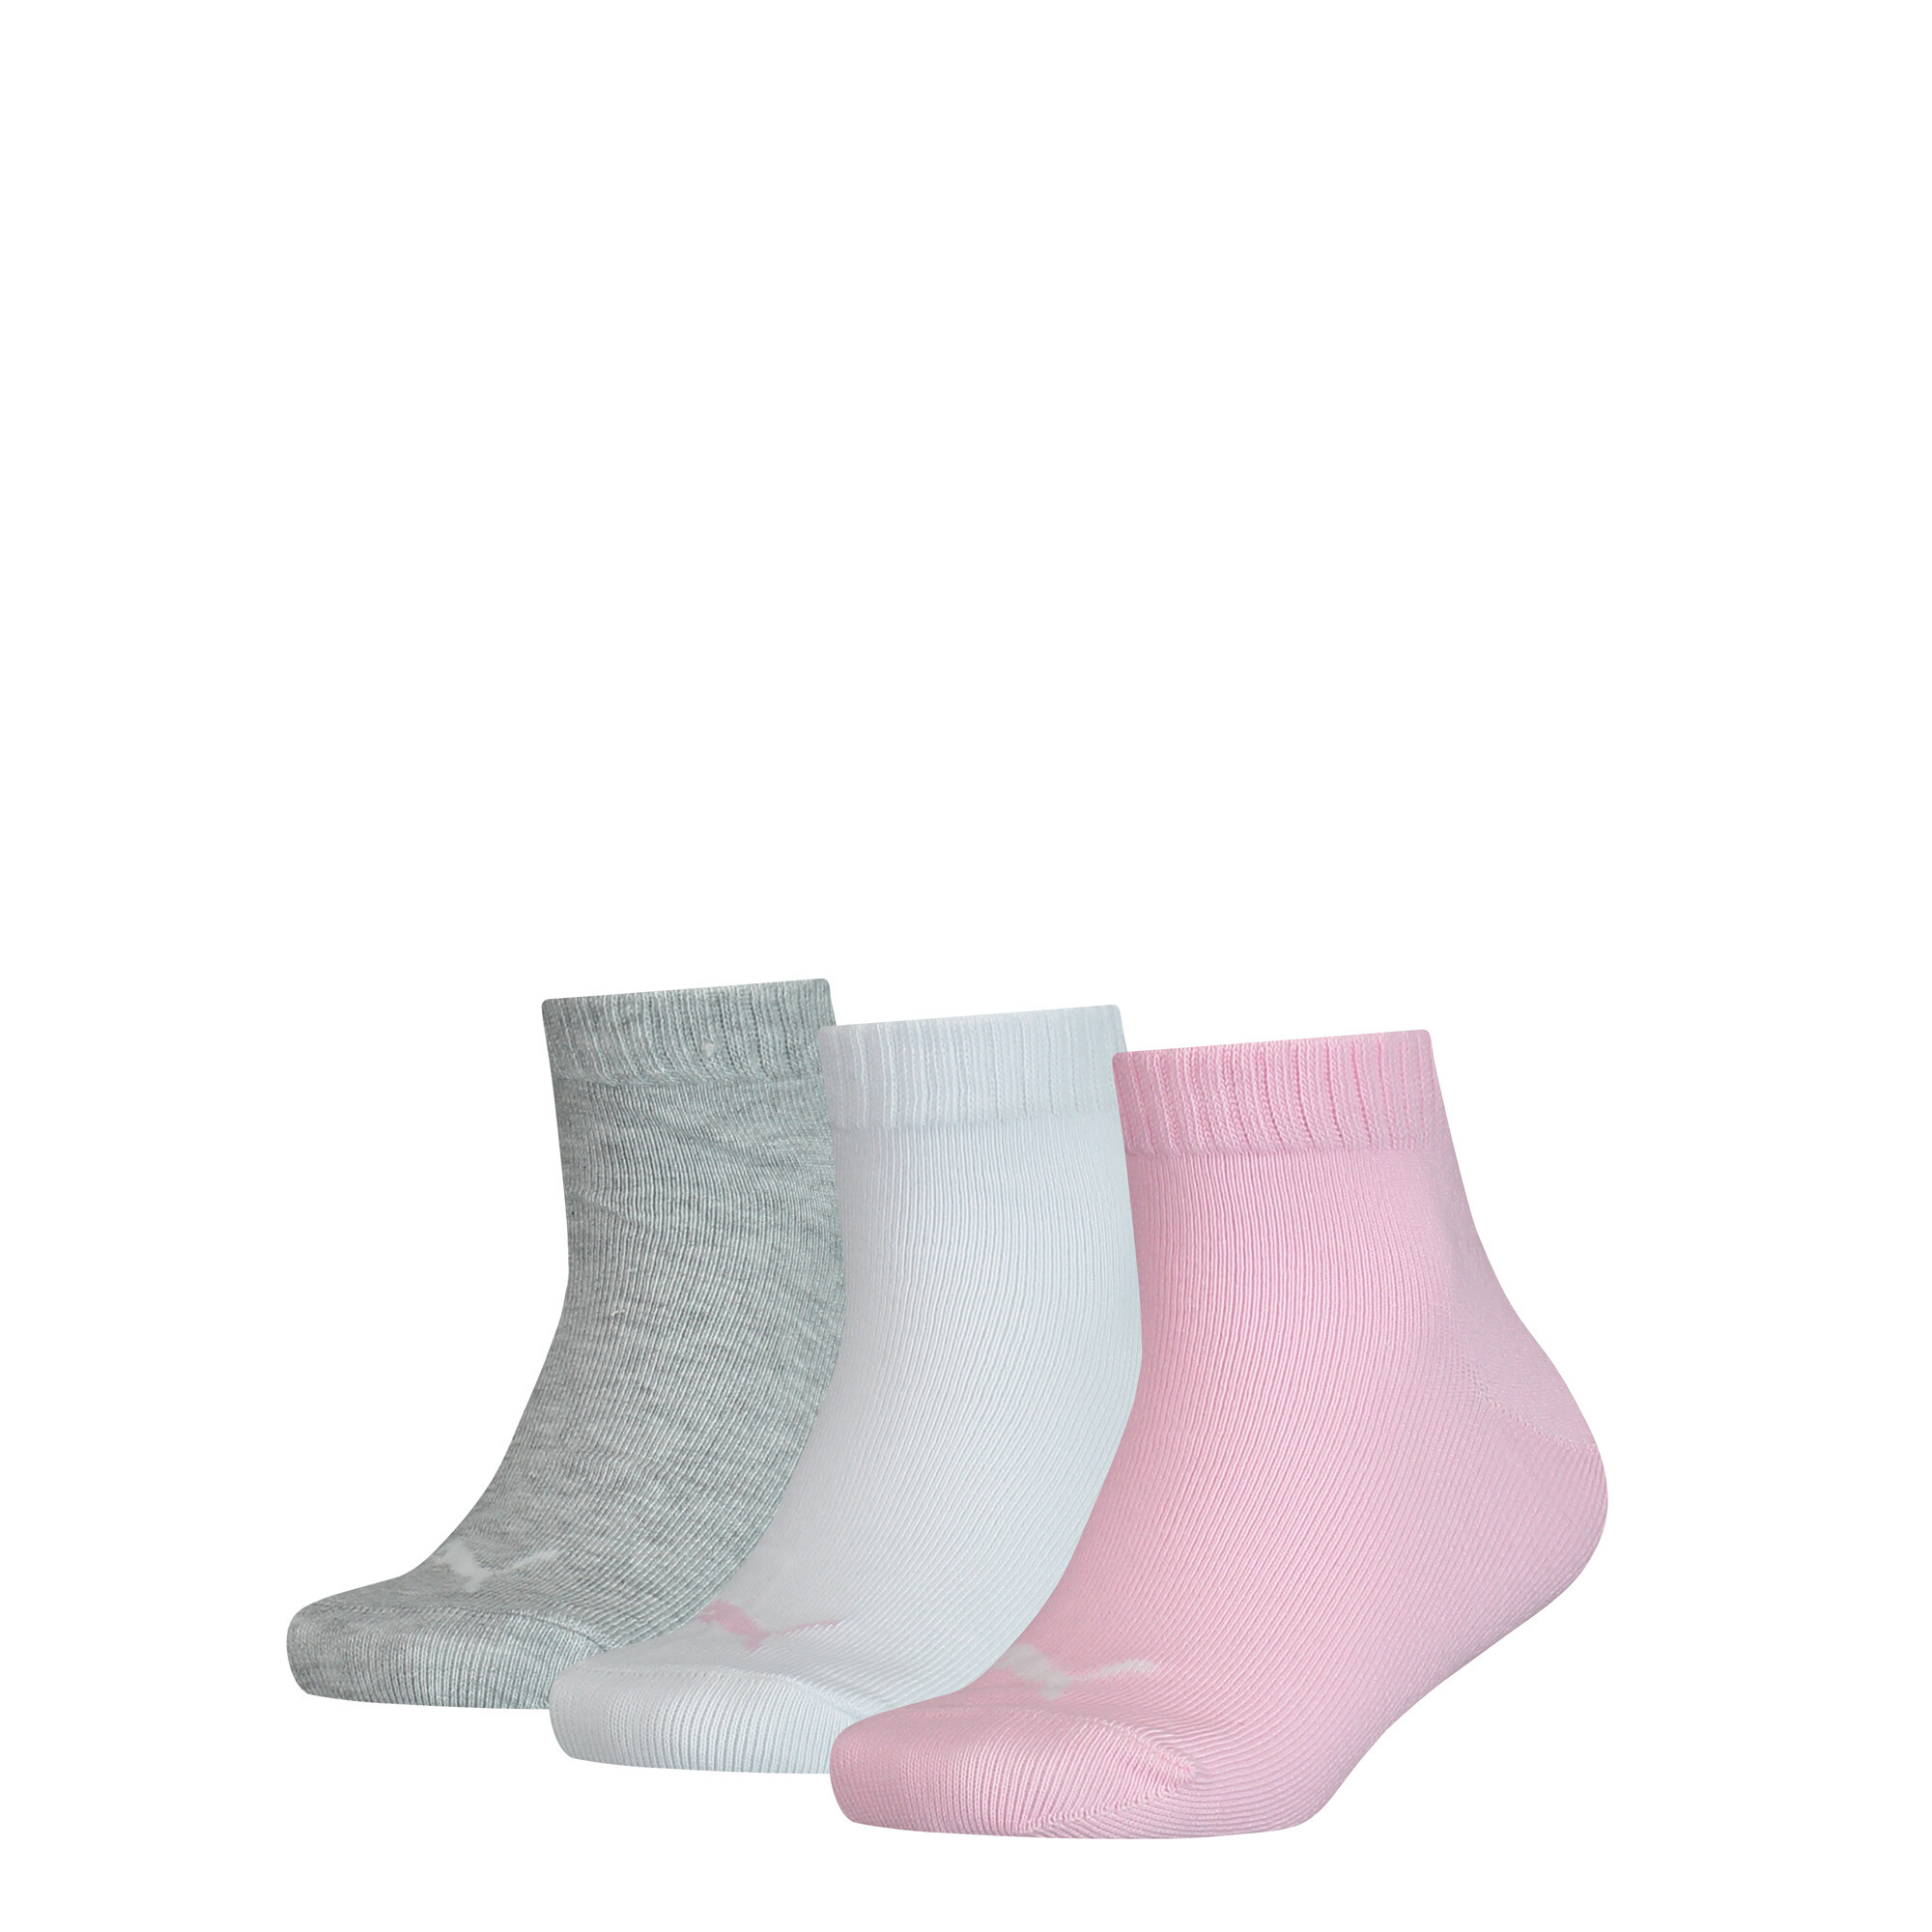 Kids' PUMA Quarter Socks 3 Pack In Pink, Size 31-34